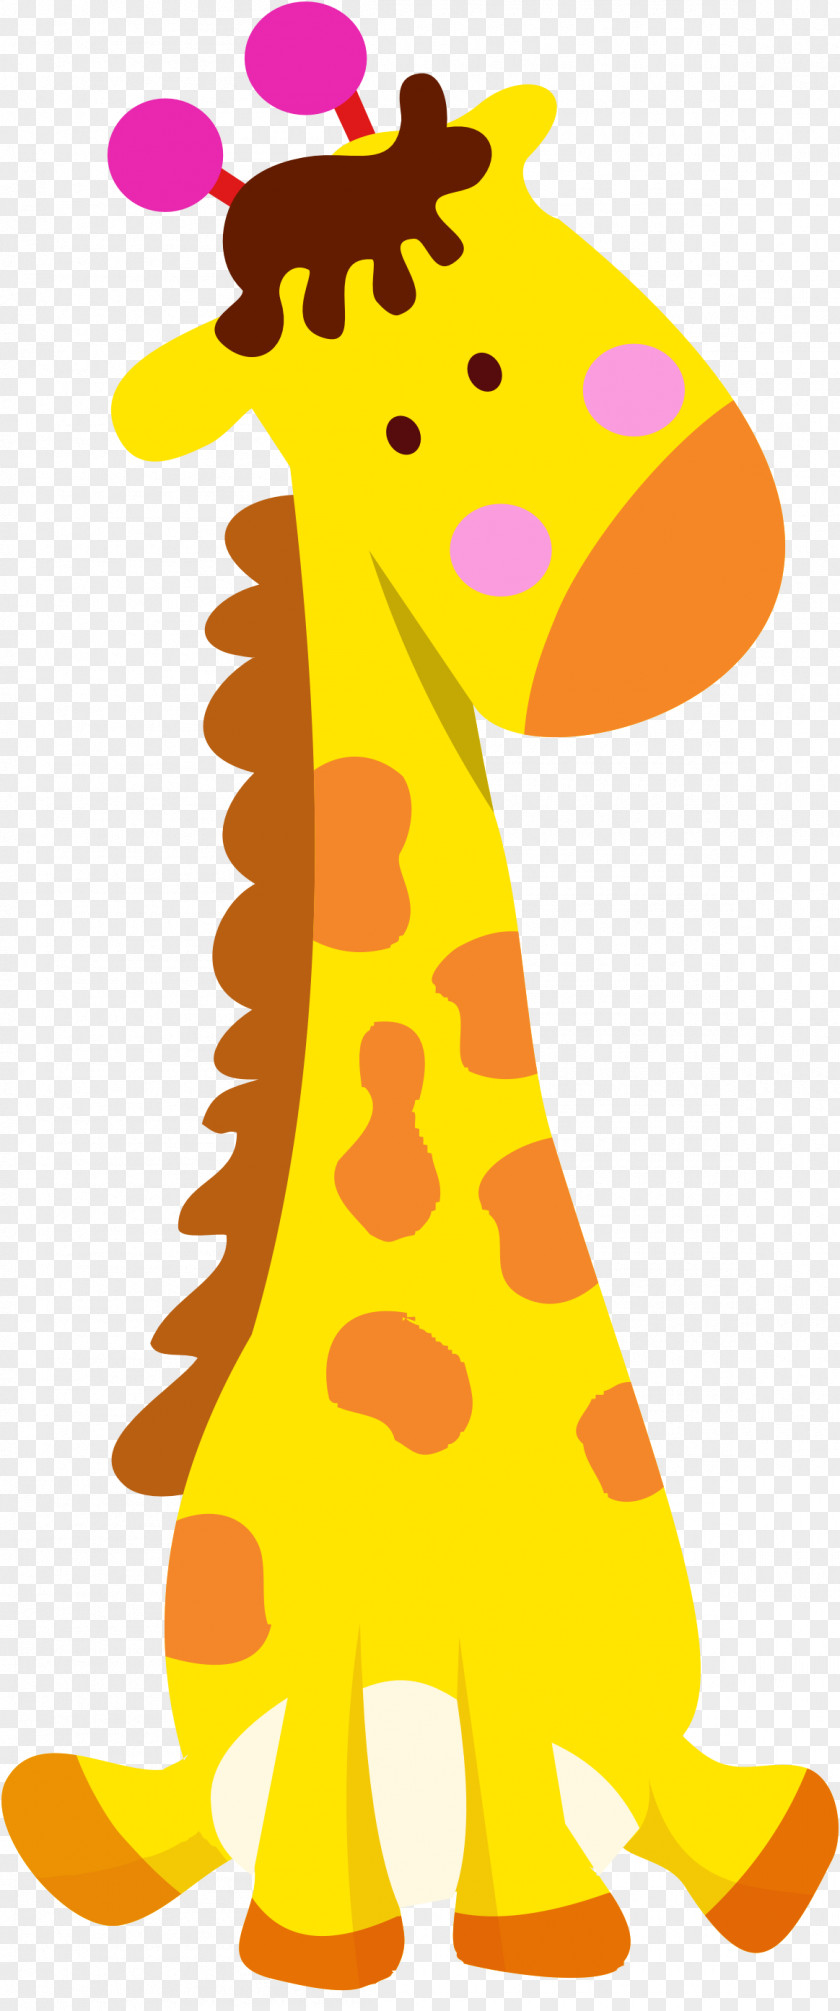 Tahu Cartoon Northern Giraffe Caricature Clip Art PNG